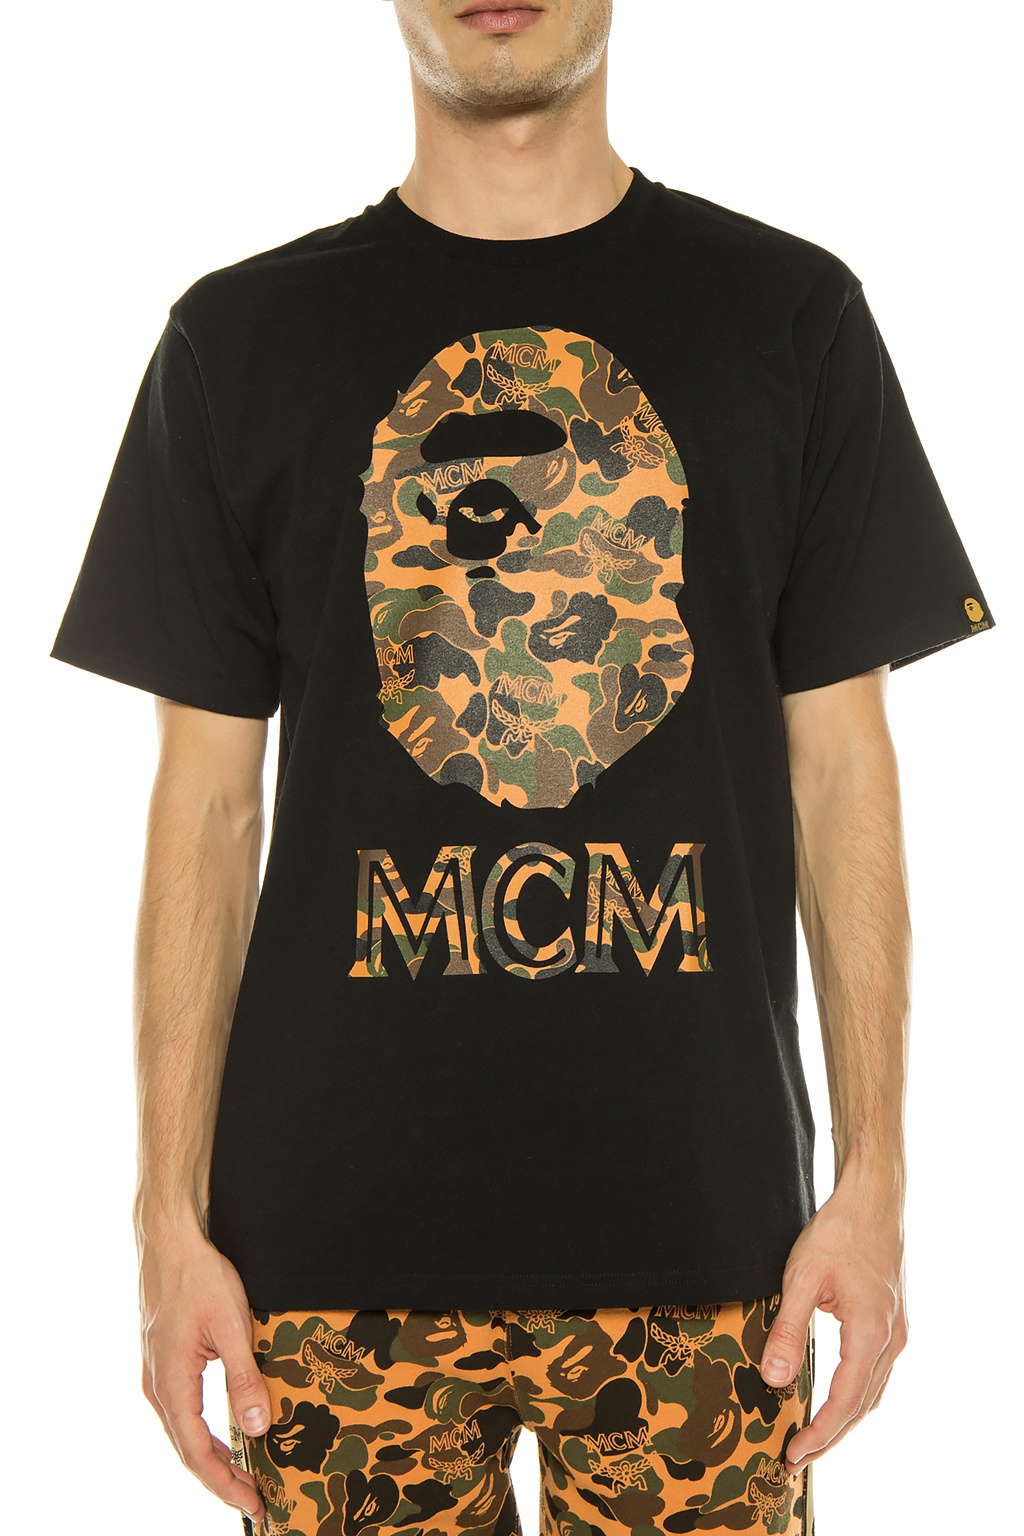 MCM bape tee 黒 black Tシャツ